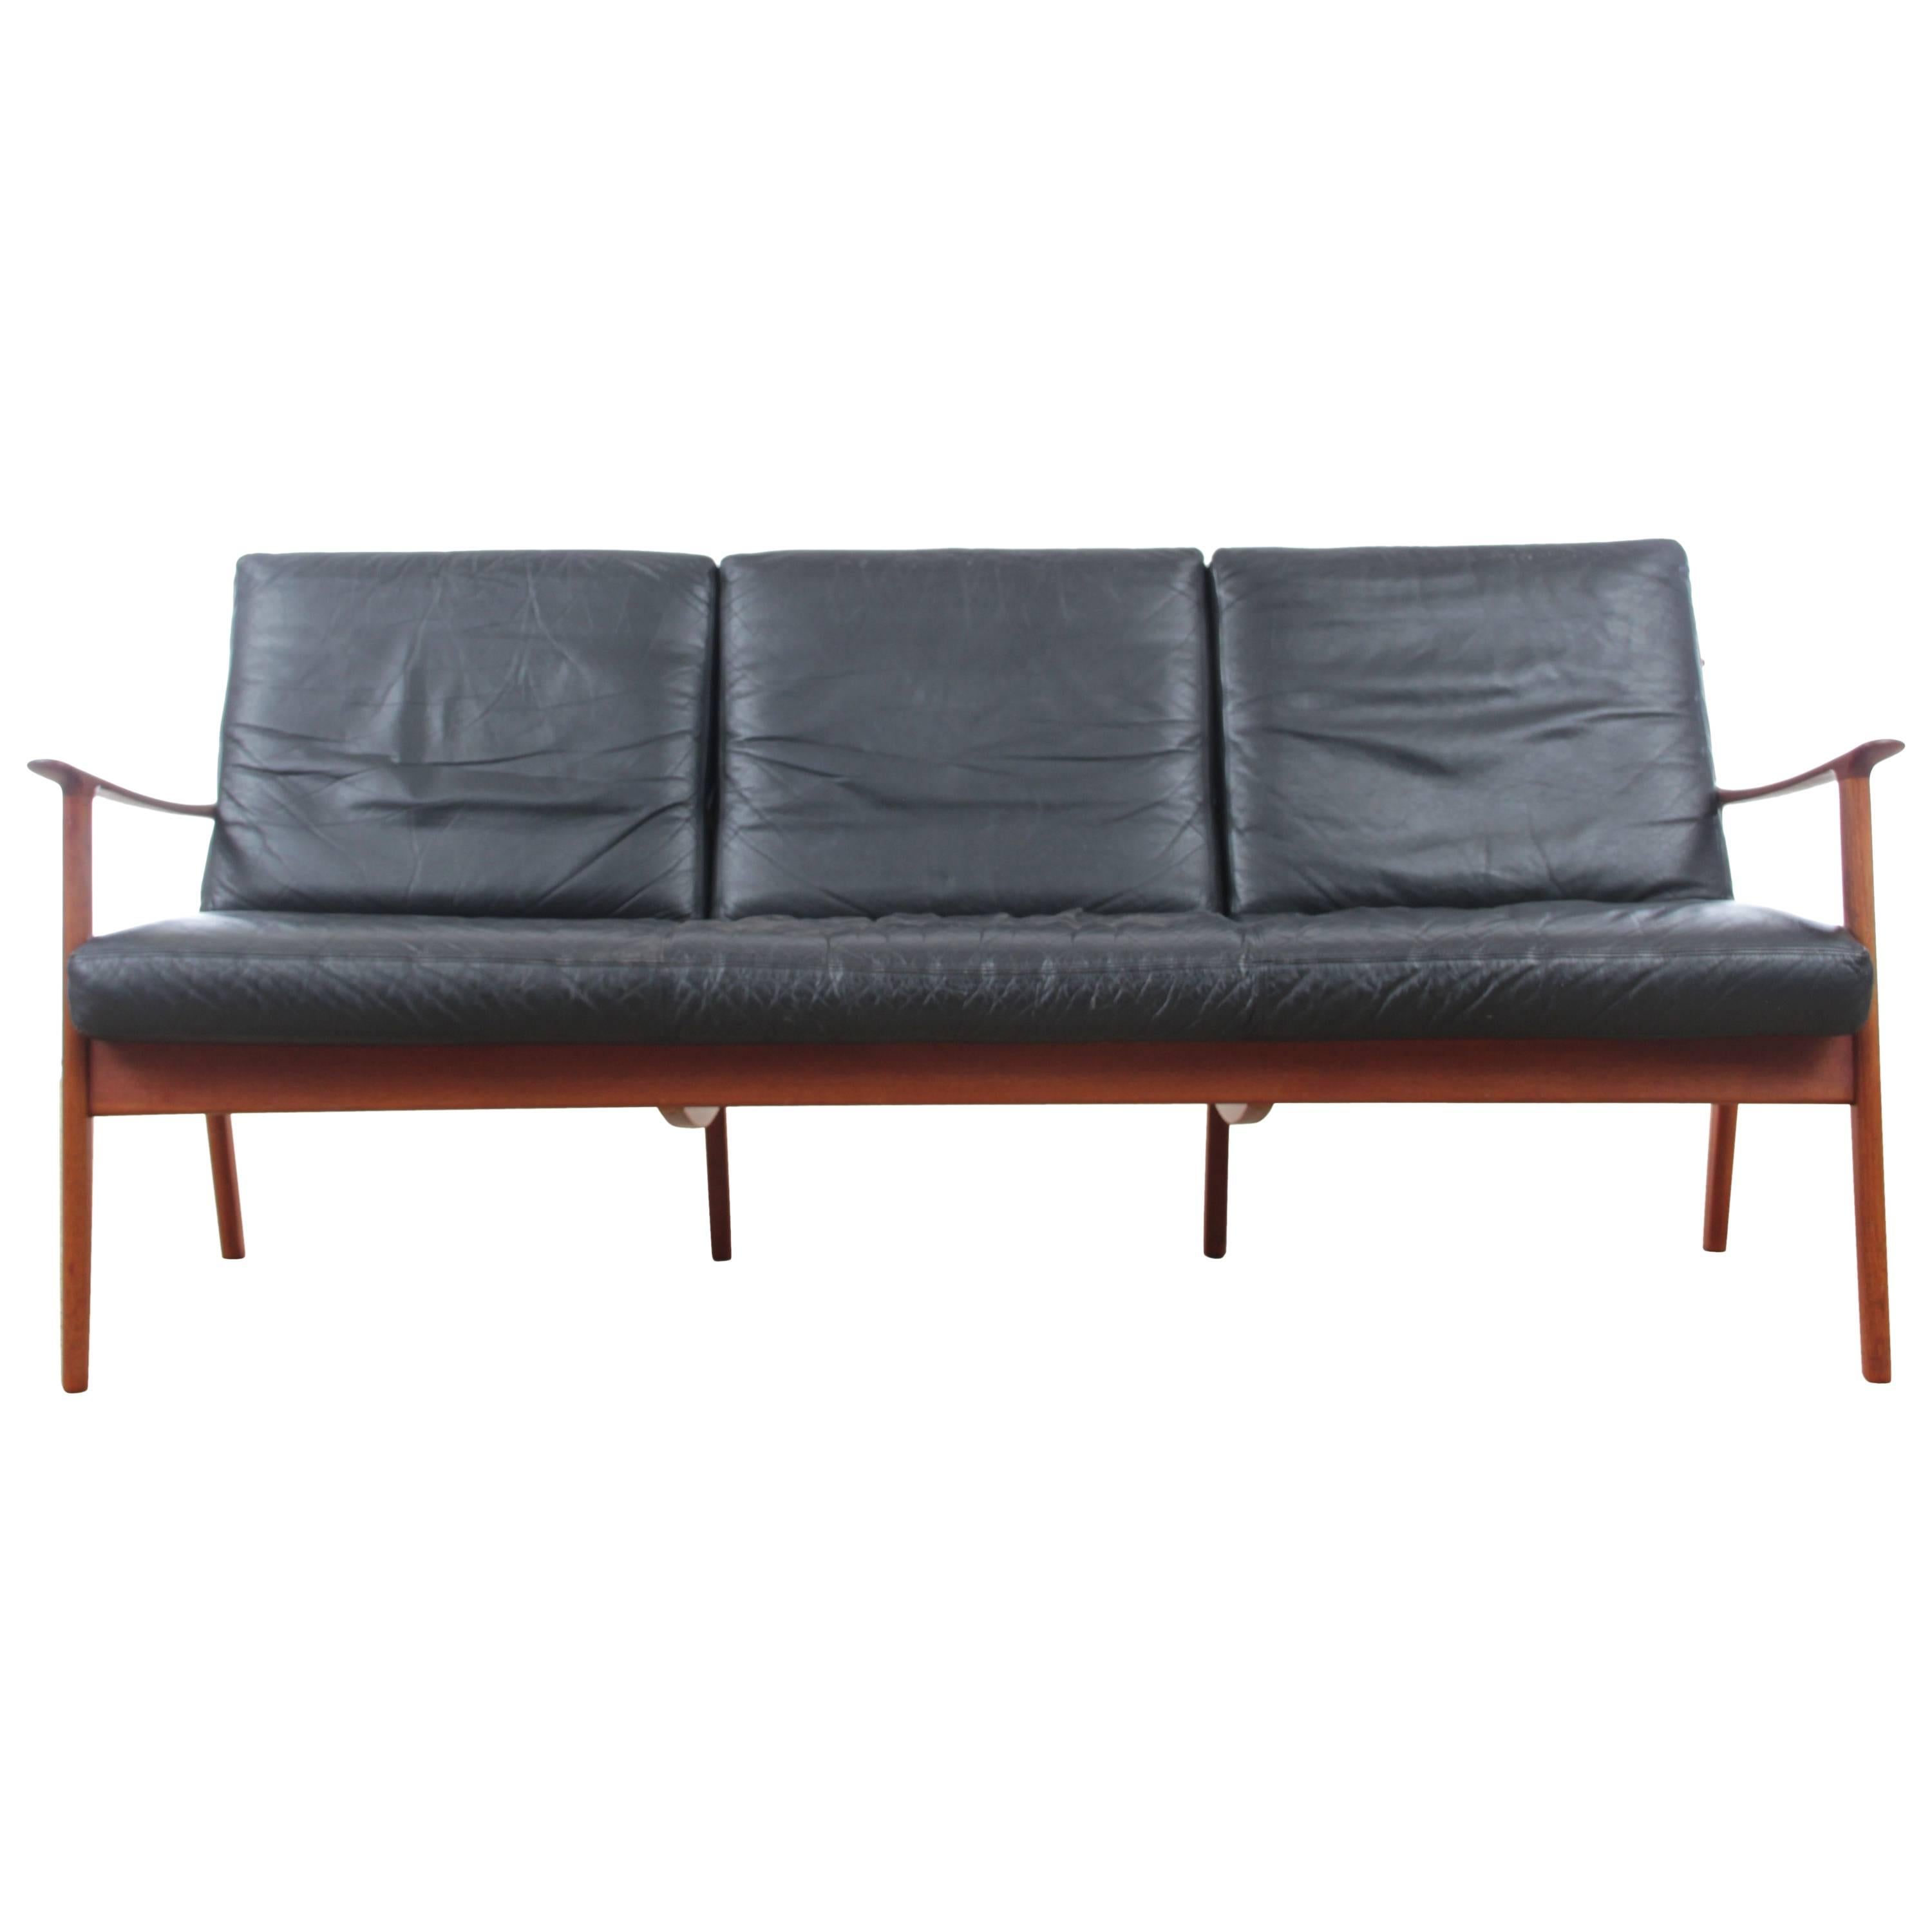 Danish Mid-Century Modern Sofa Three-Seats by Ole Wanscher for Paul Jepesen